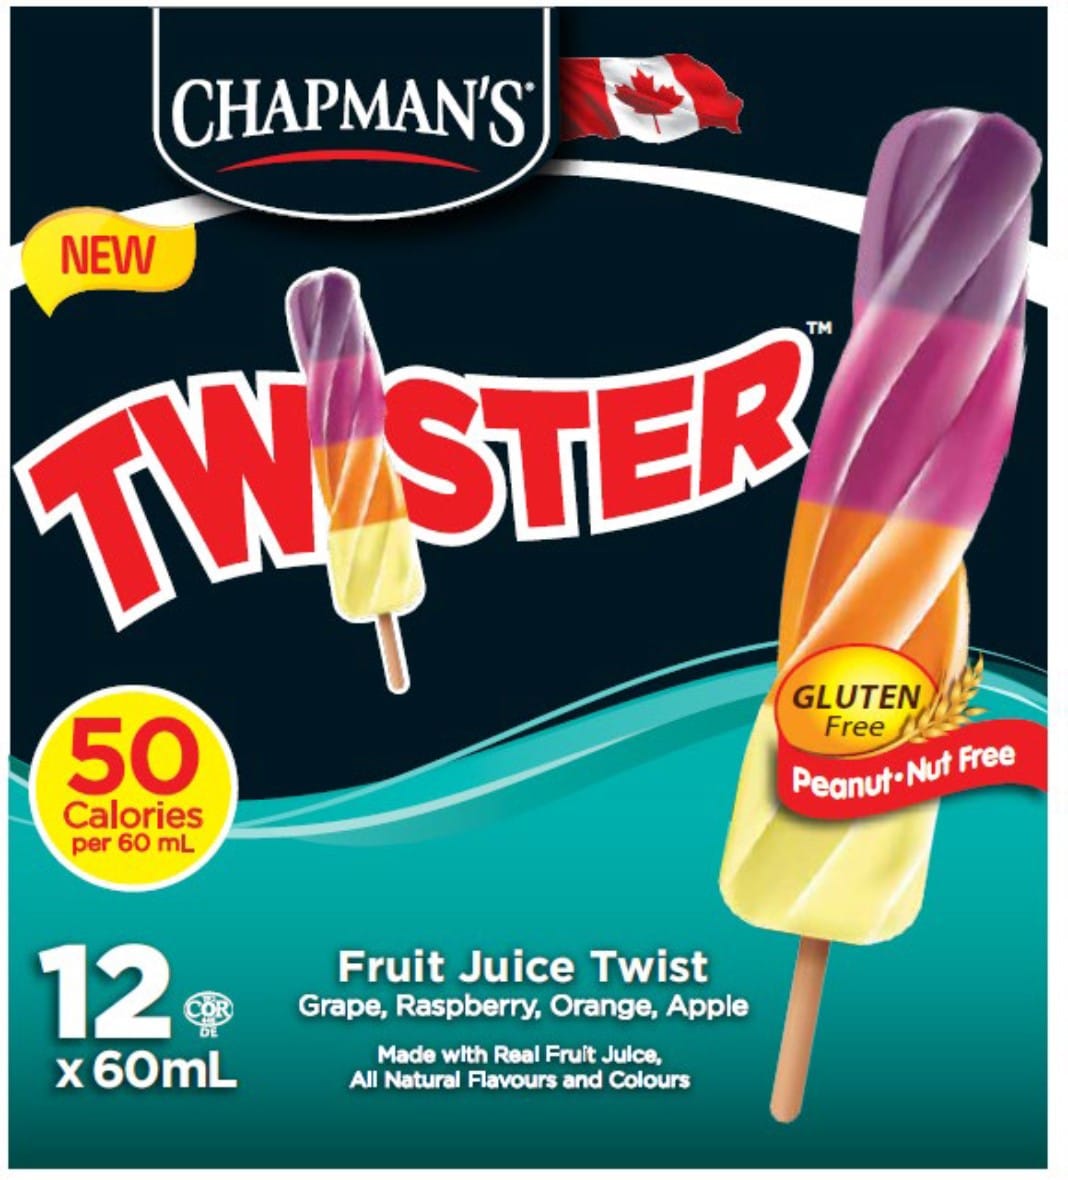 Chapman's Fruit Juice water ice peanut free twister